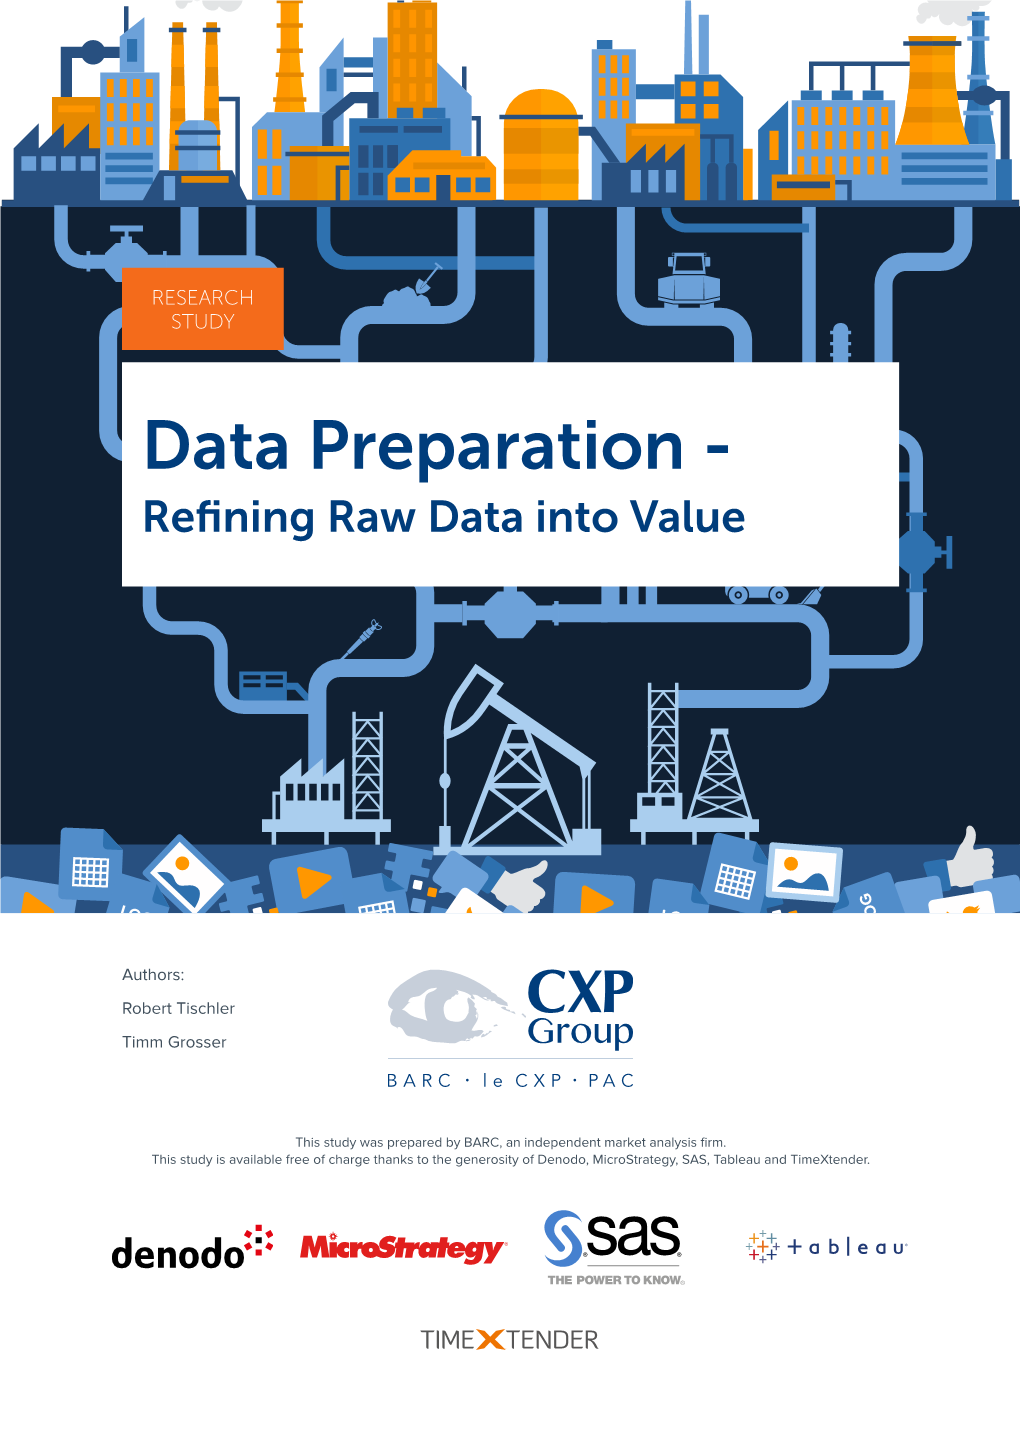 Data Preparation - Refining Raw Data Into Value